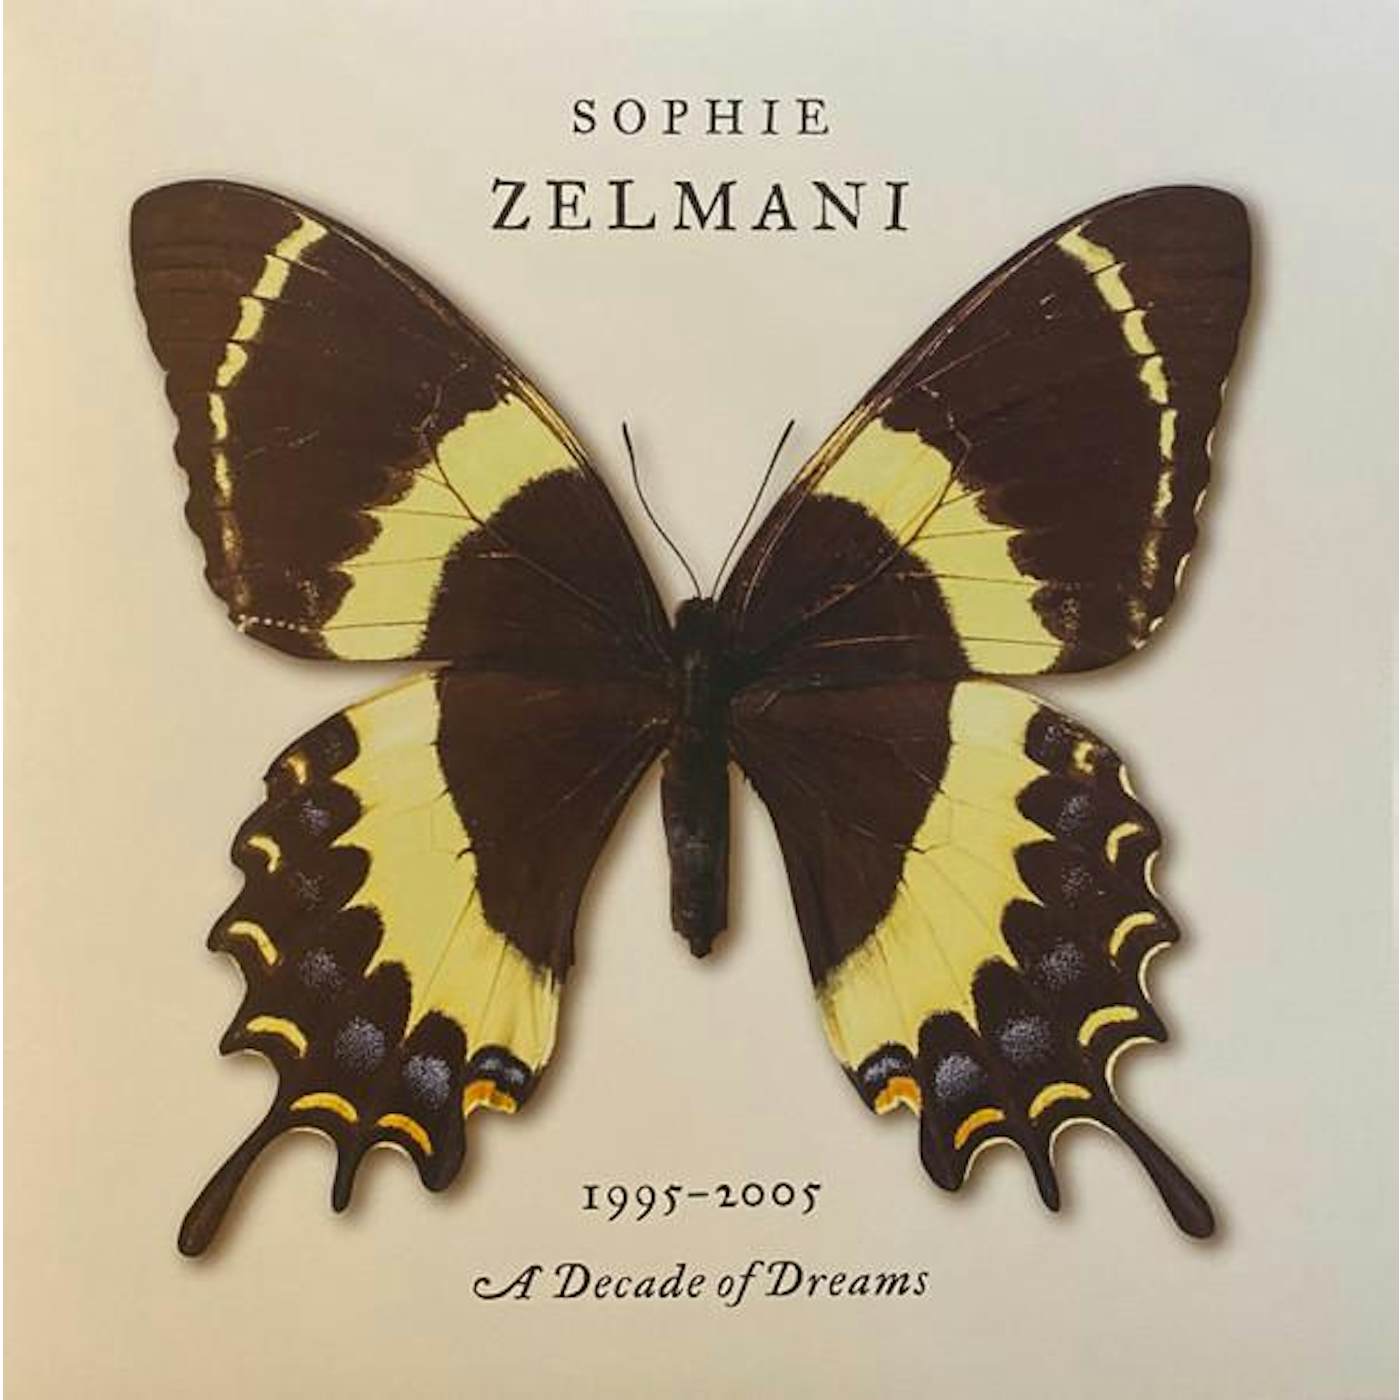 Sophie Zelmani Decade Of Dreams 1995-2005 (2LP/180g/Yellow & White Vinyl Record)